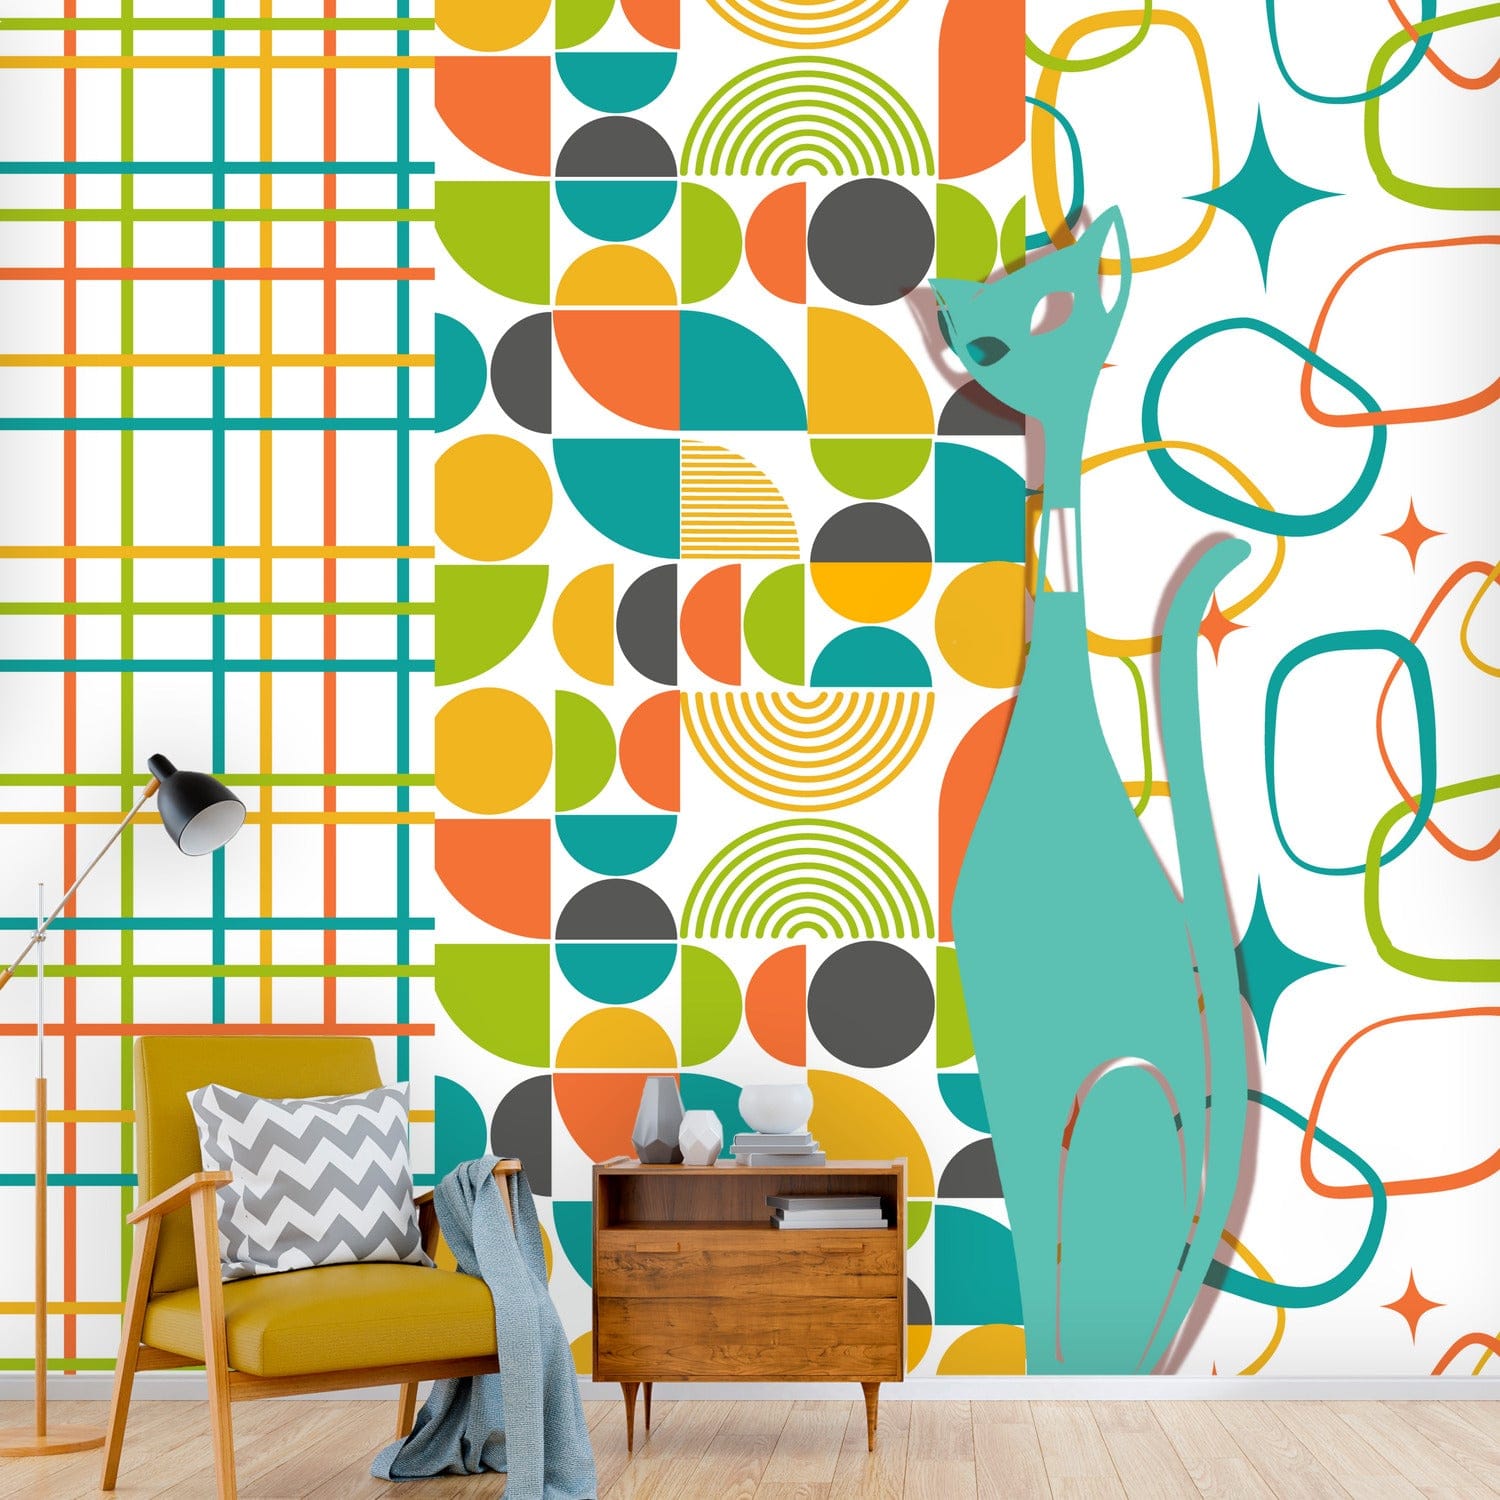 Mid Century Modern Wall Paper Atomic Kitties, Geometric, Bold, Colorful, Orange, Teal, Yellow, Funky Fun, Kitsch Retro Wall Murals Wallpaper